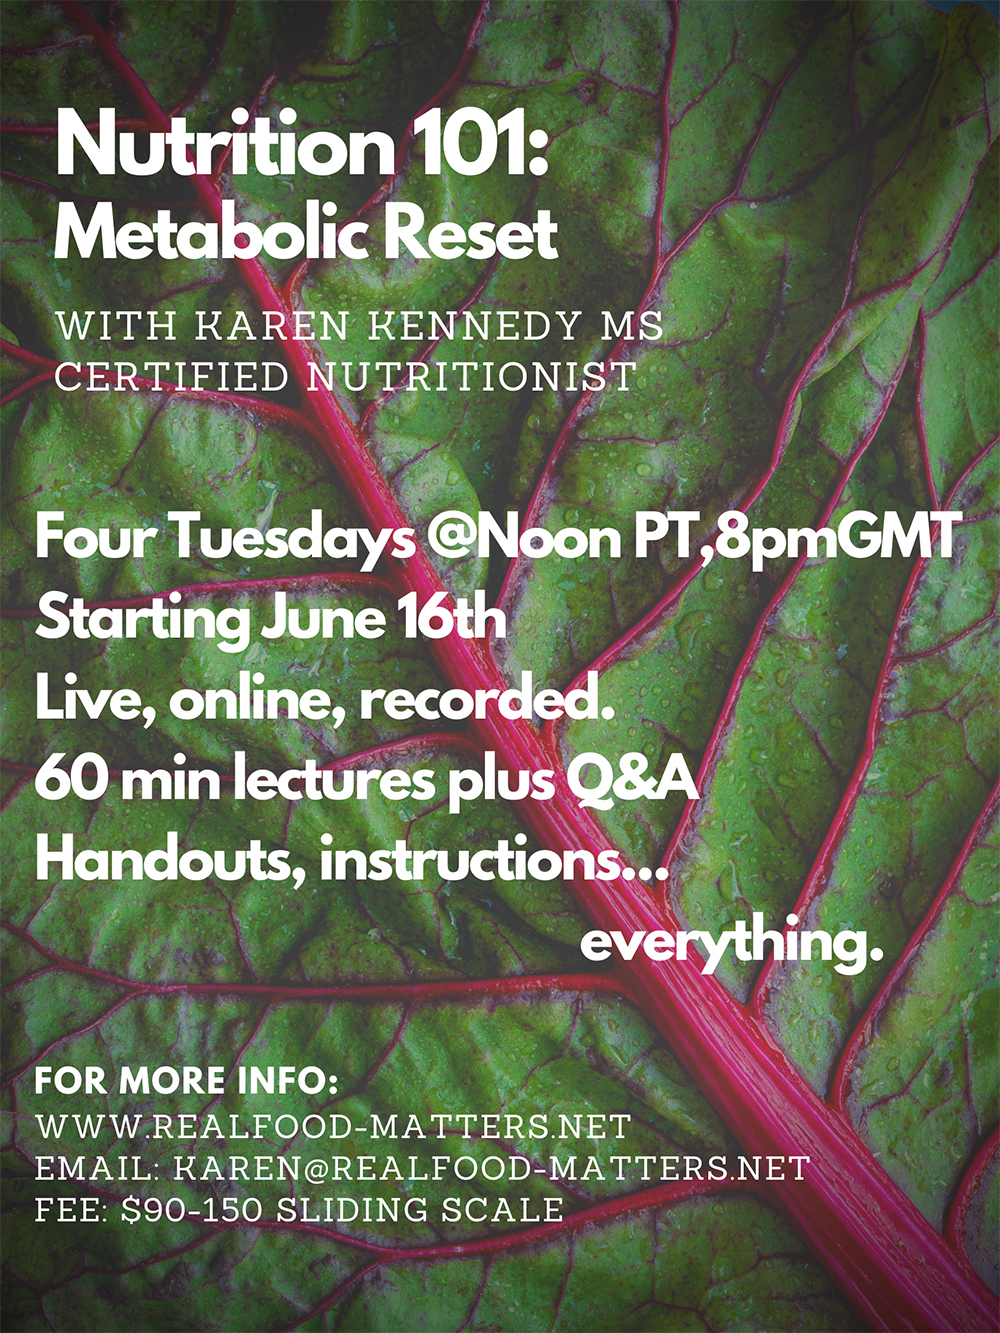 Nutrition 101 Metobolic Reset